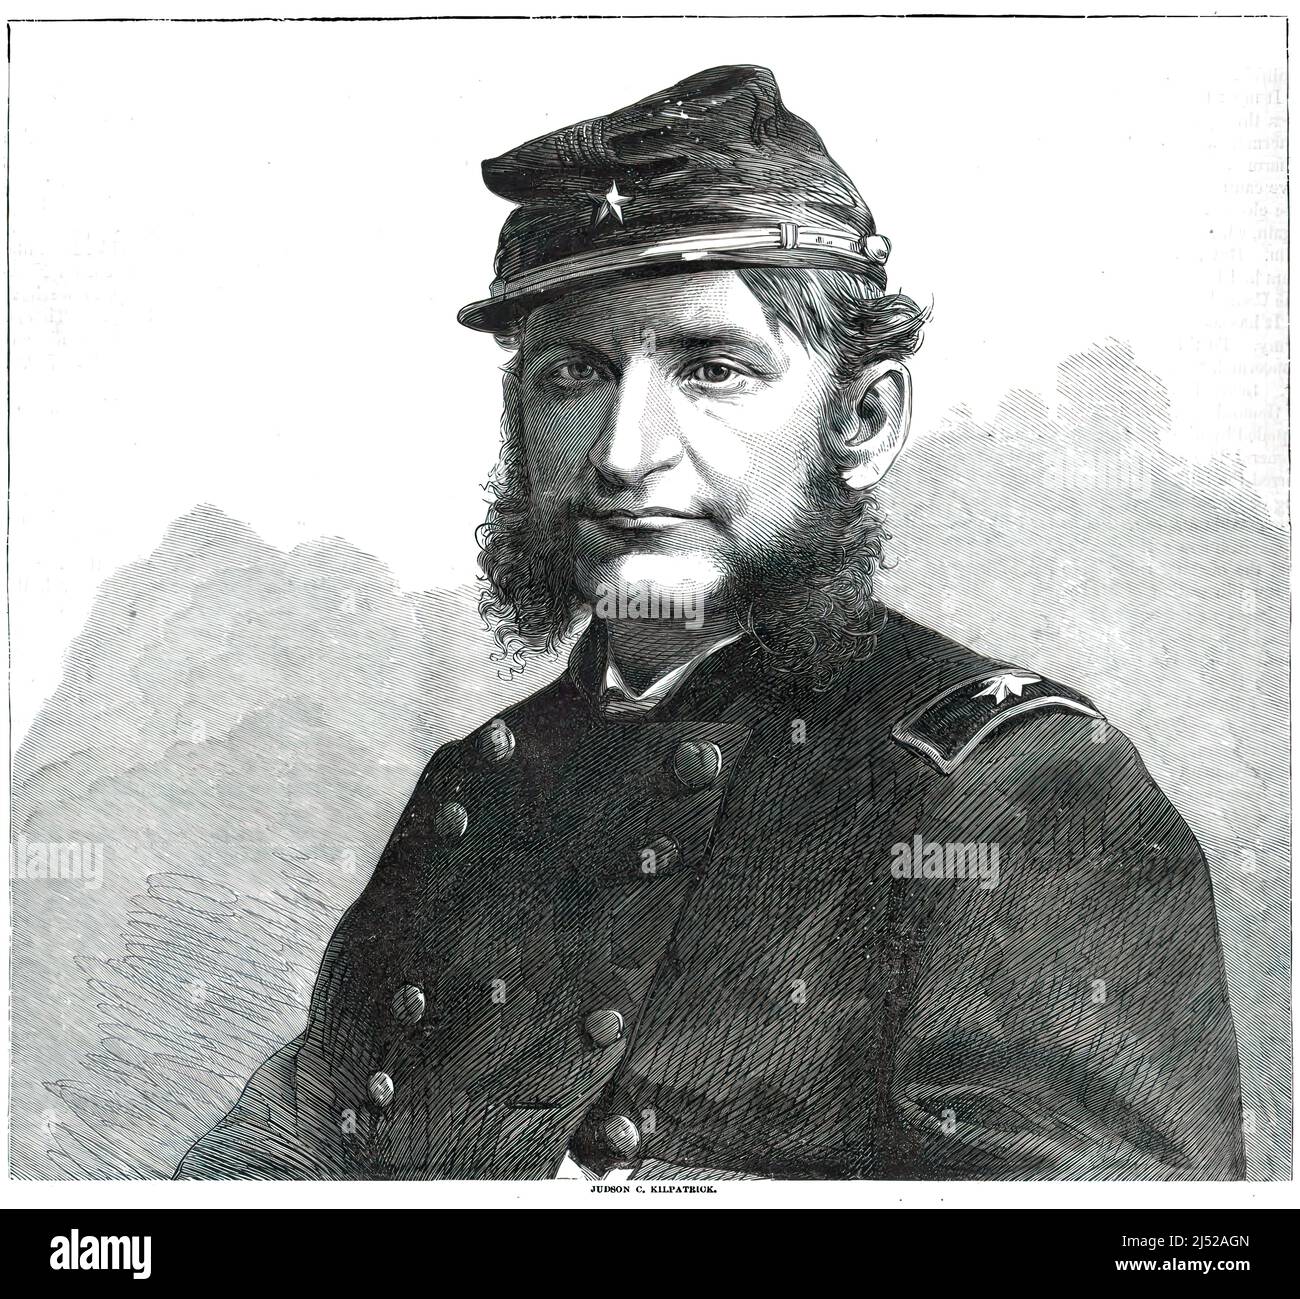 Hugh Judson Kilpatrick, Union Army General in the American Civil War. 19th century illustration. Stock Photo